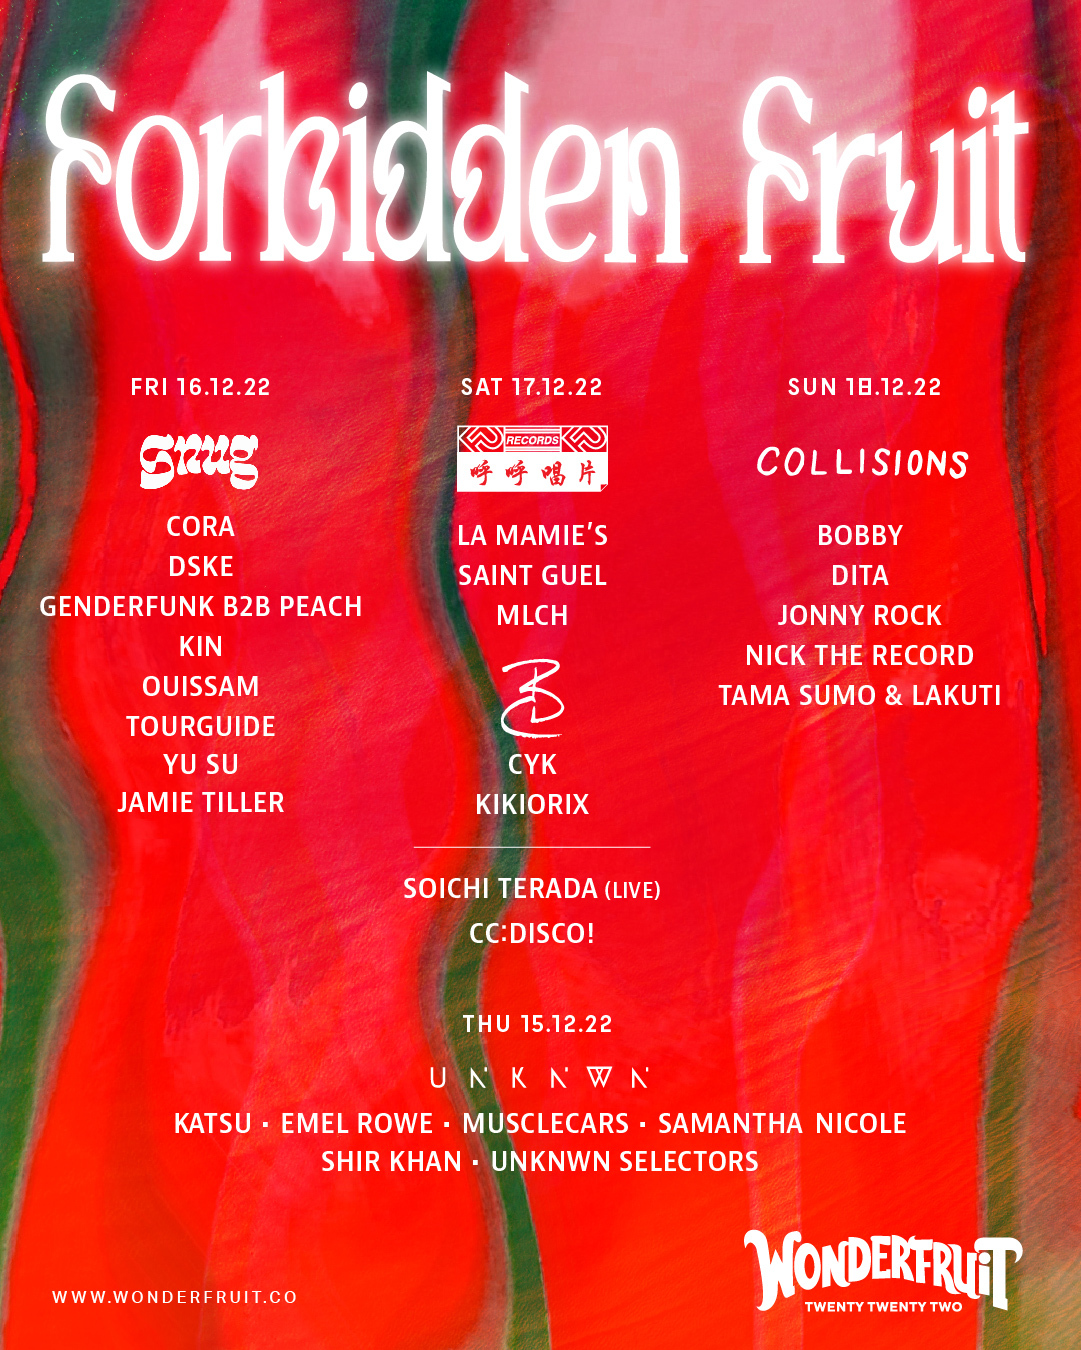 Forbidden Fruit Poster